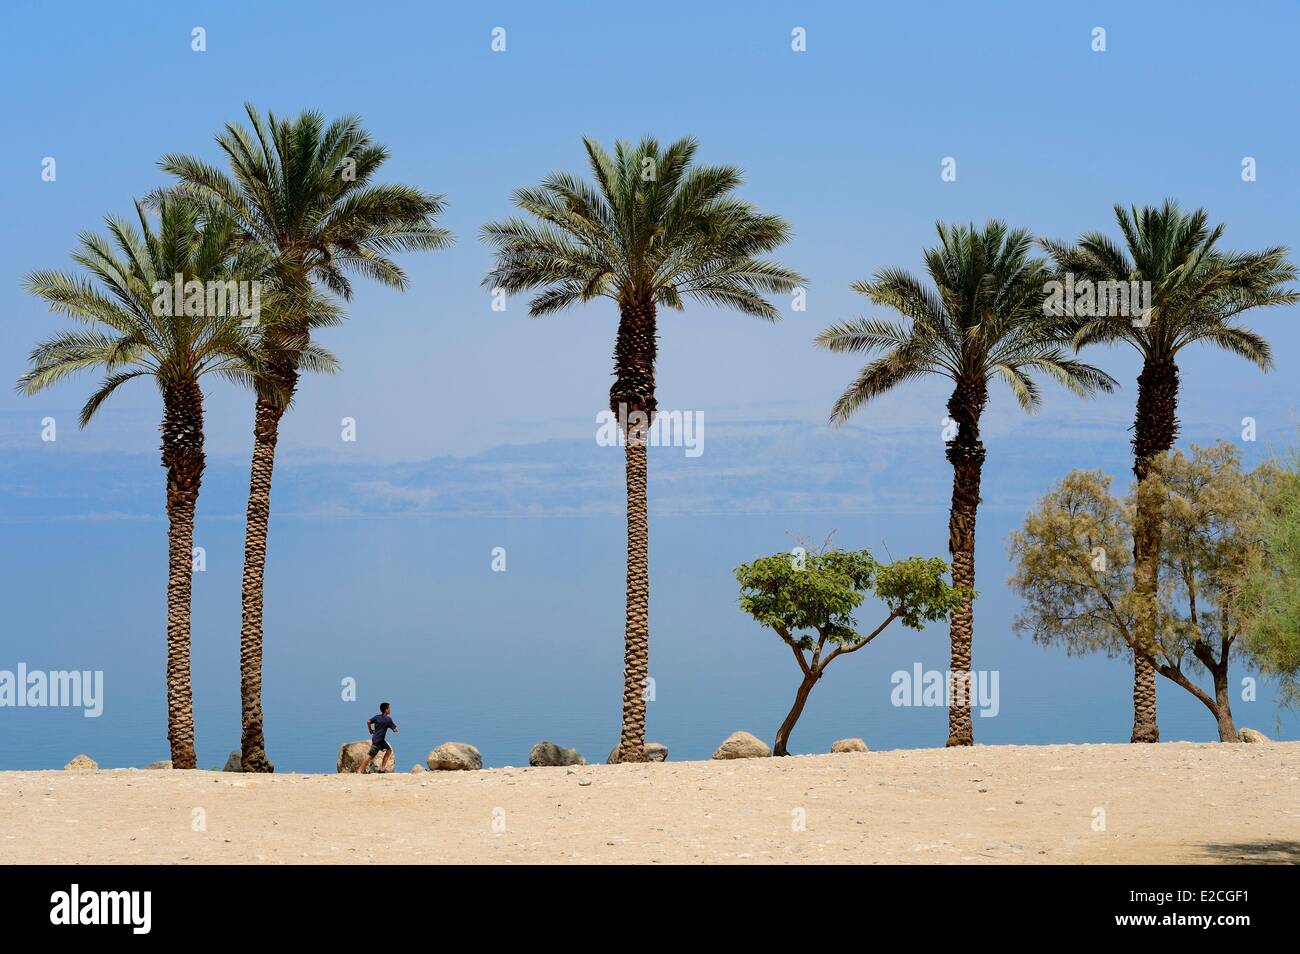 Israel, Southern district, Ein Gedi Beach on the Dead Sea Stock Photo